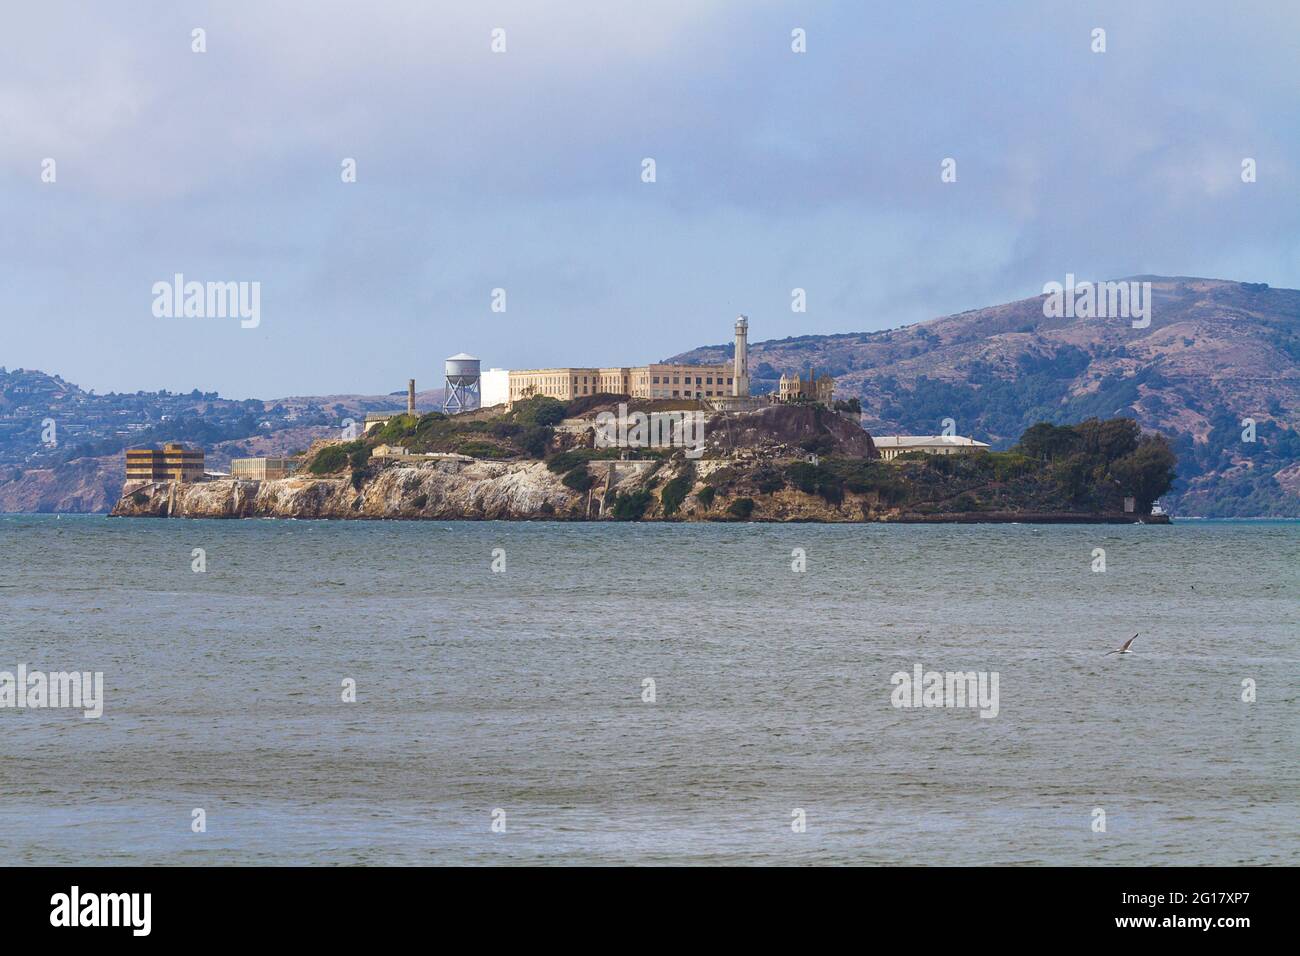 Alcatraz Island seen from Pier 39 in San Francisco Stock Photo